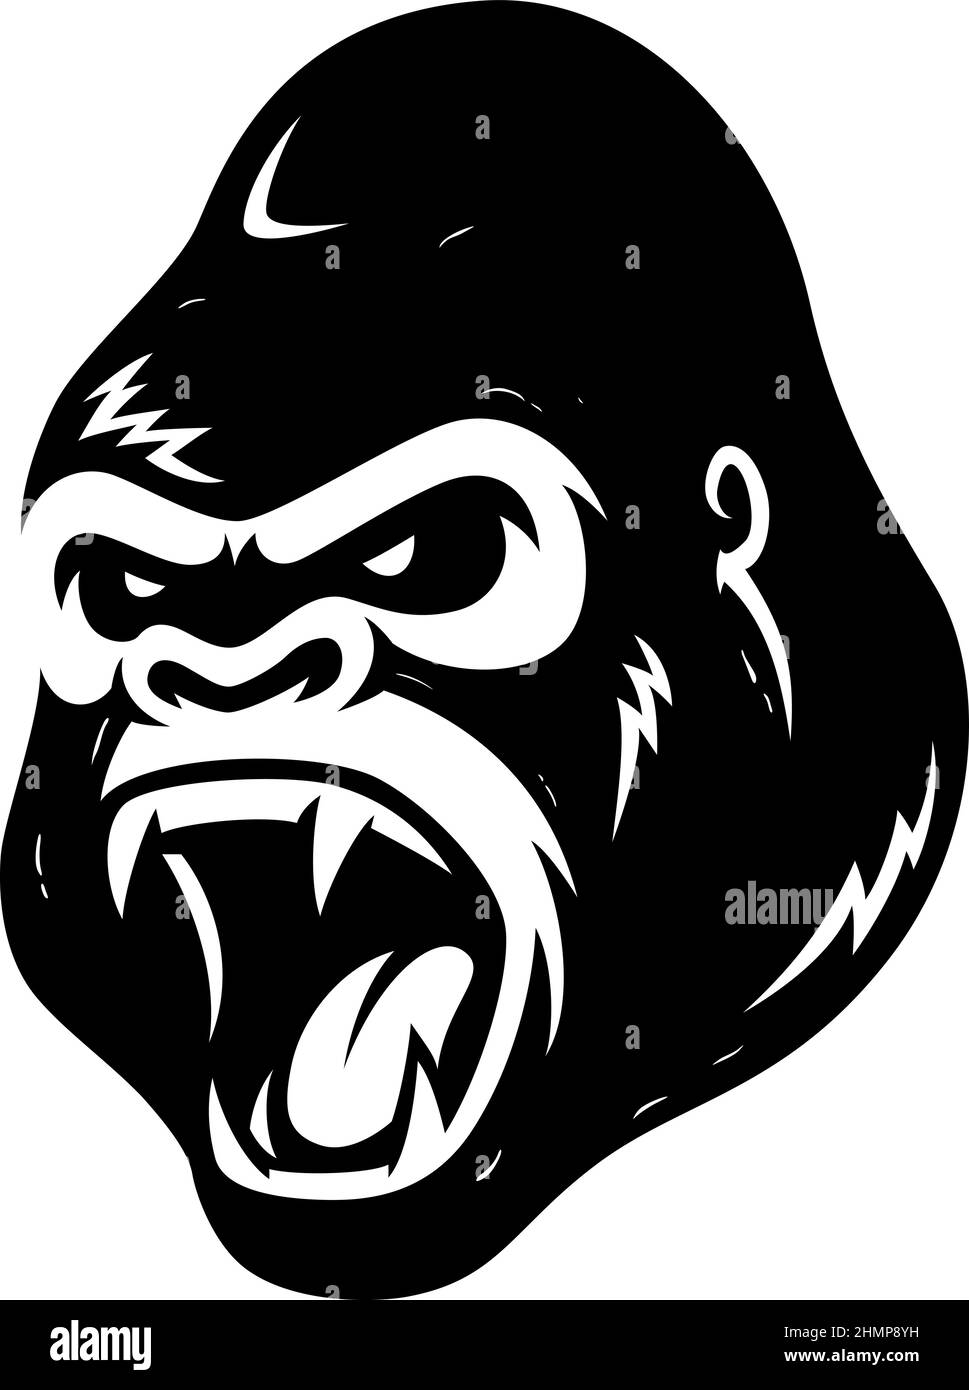 Ape roaring Stock Vector Images - Alamy